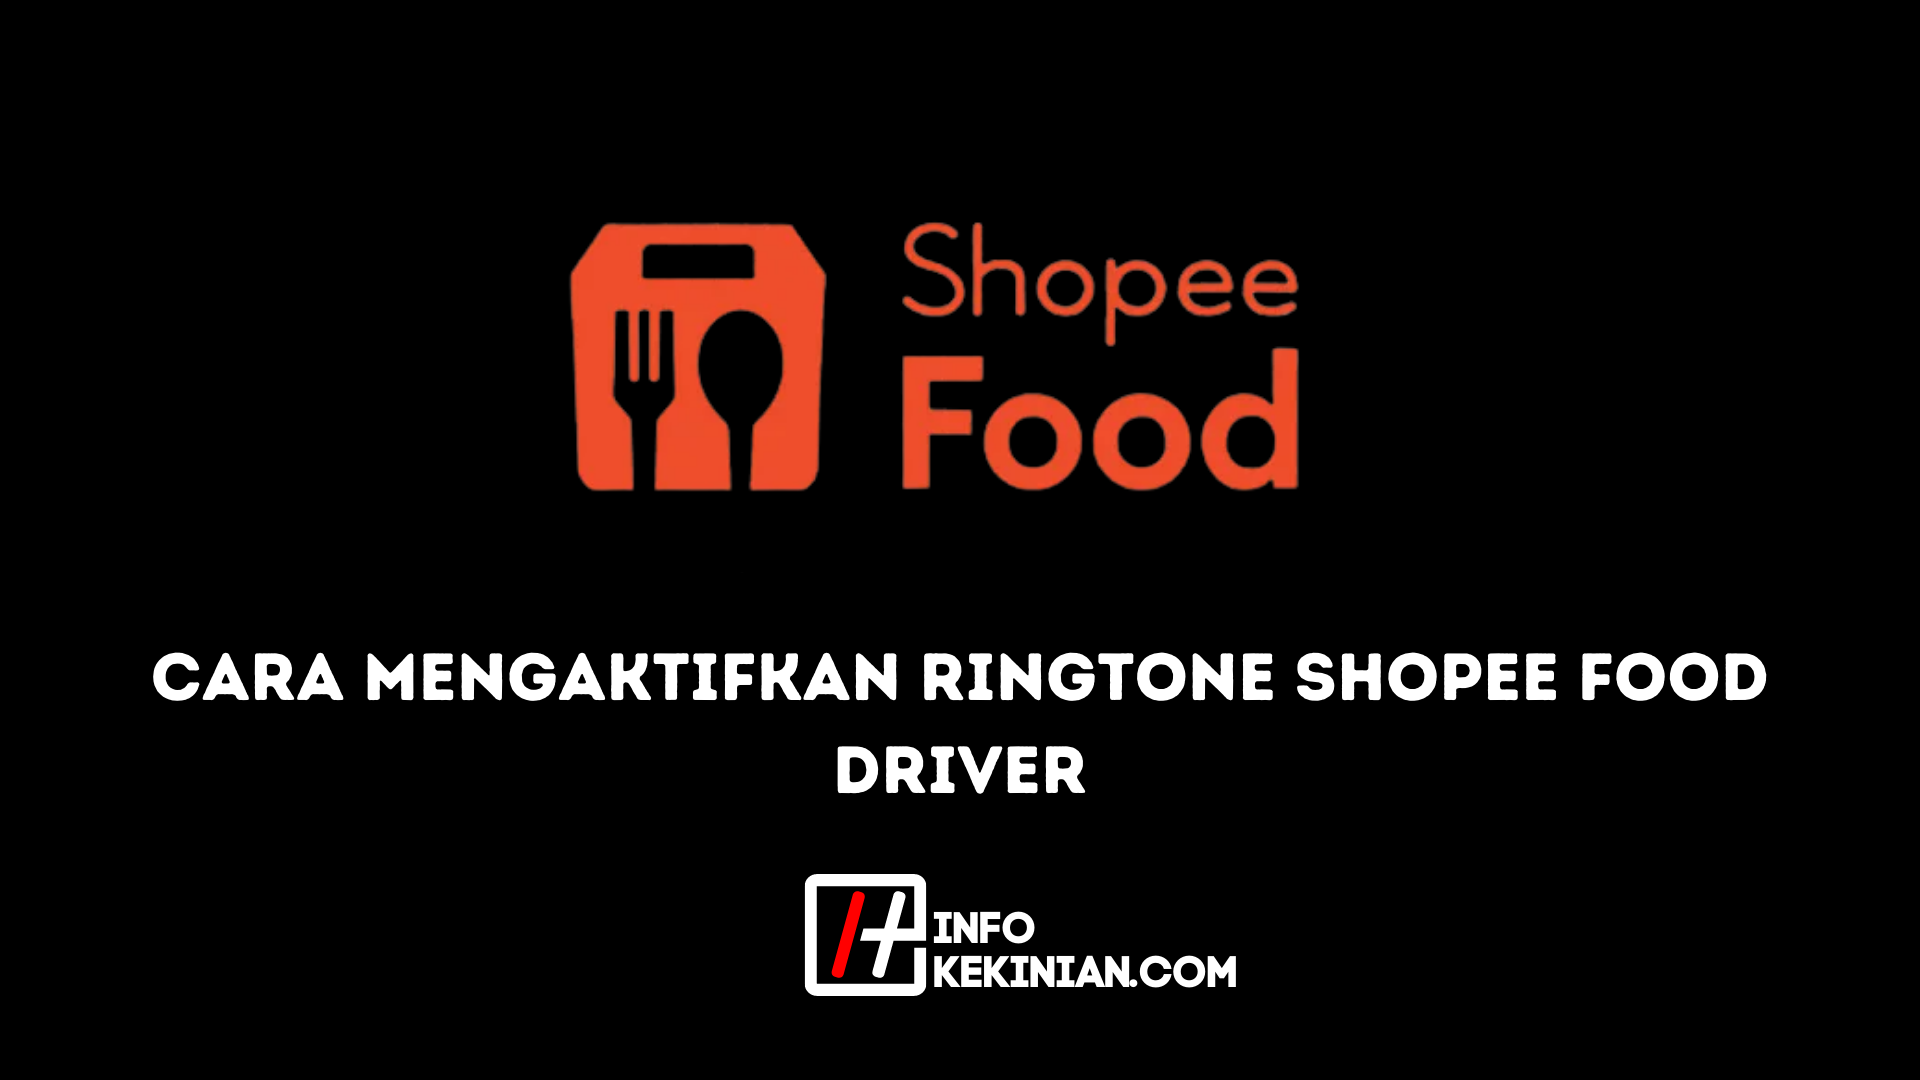 Jak aktywować dzwonek Shopee Food Driver